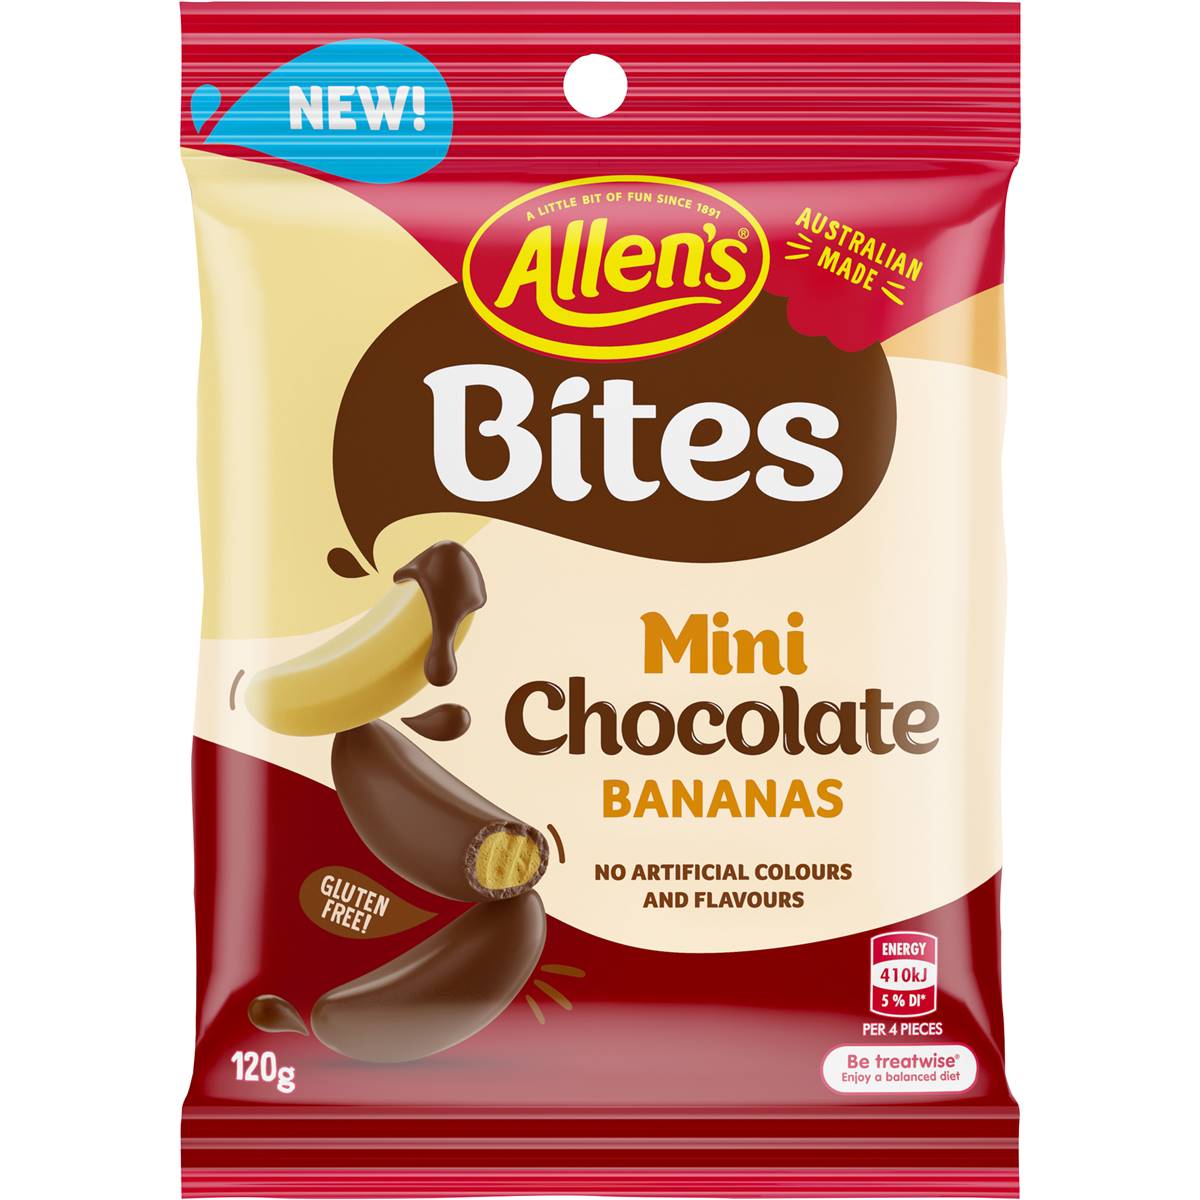 Calories in Allen's Bites Mini Chocolate Bananas